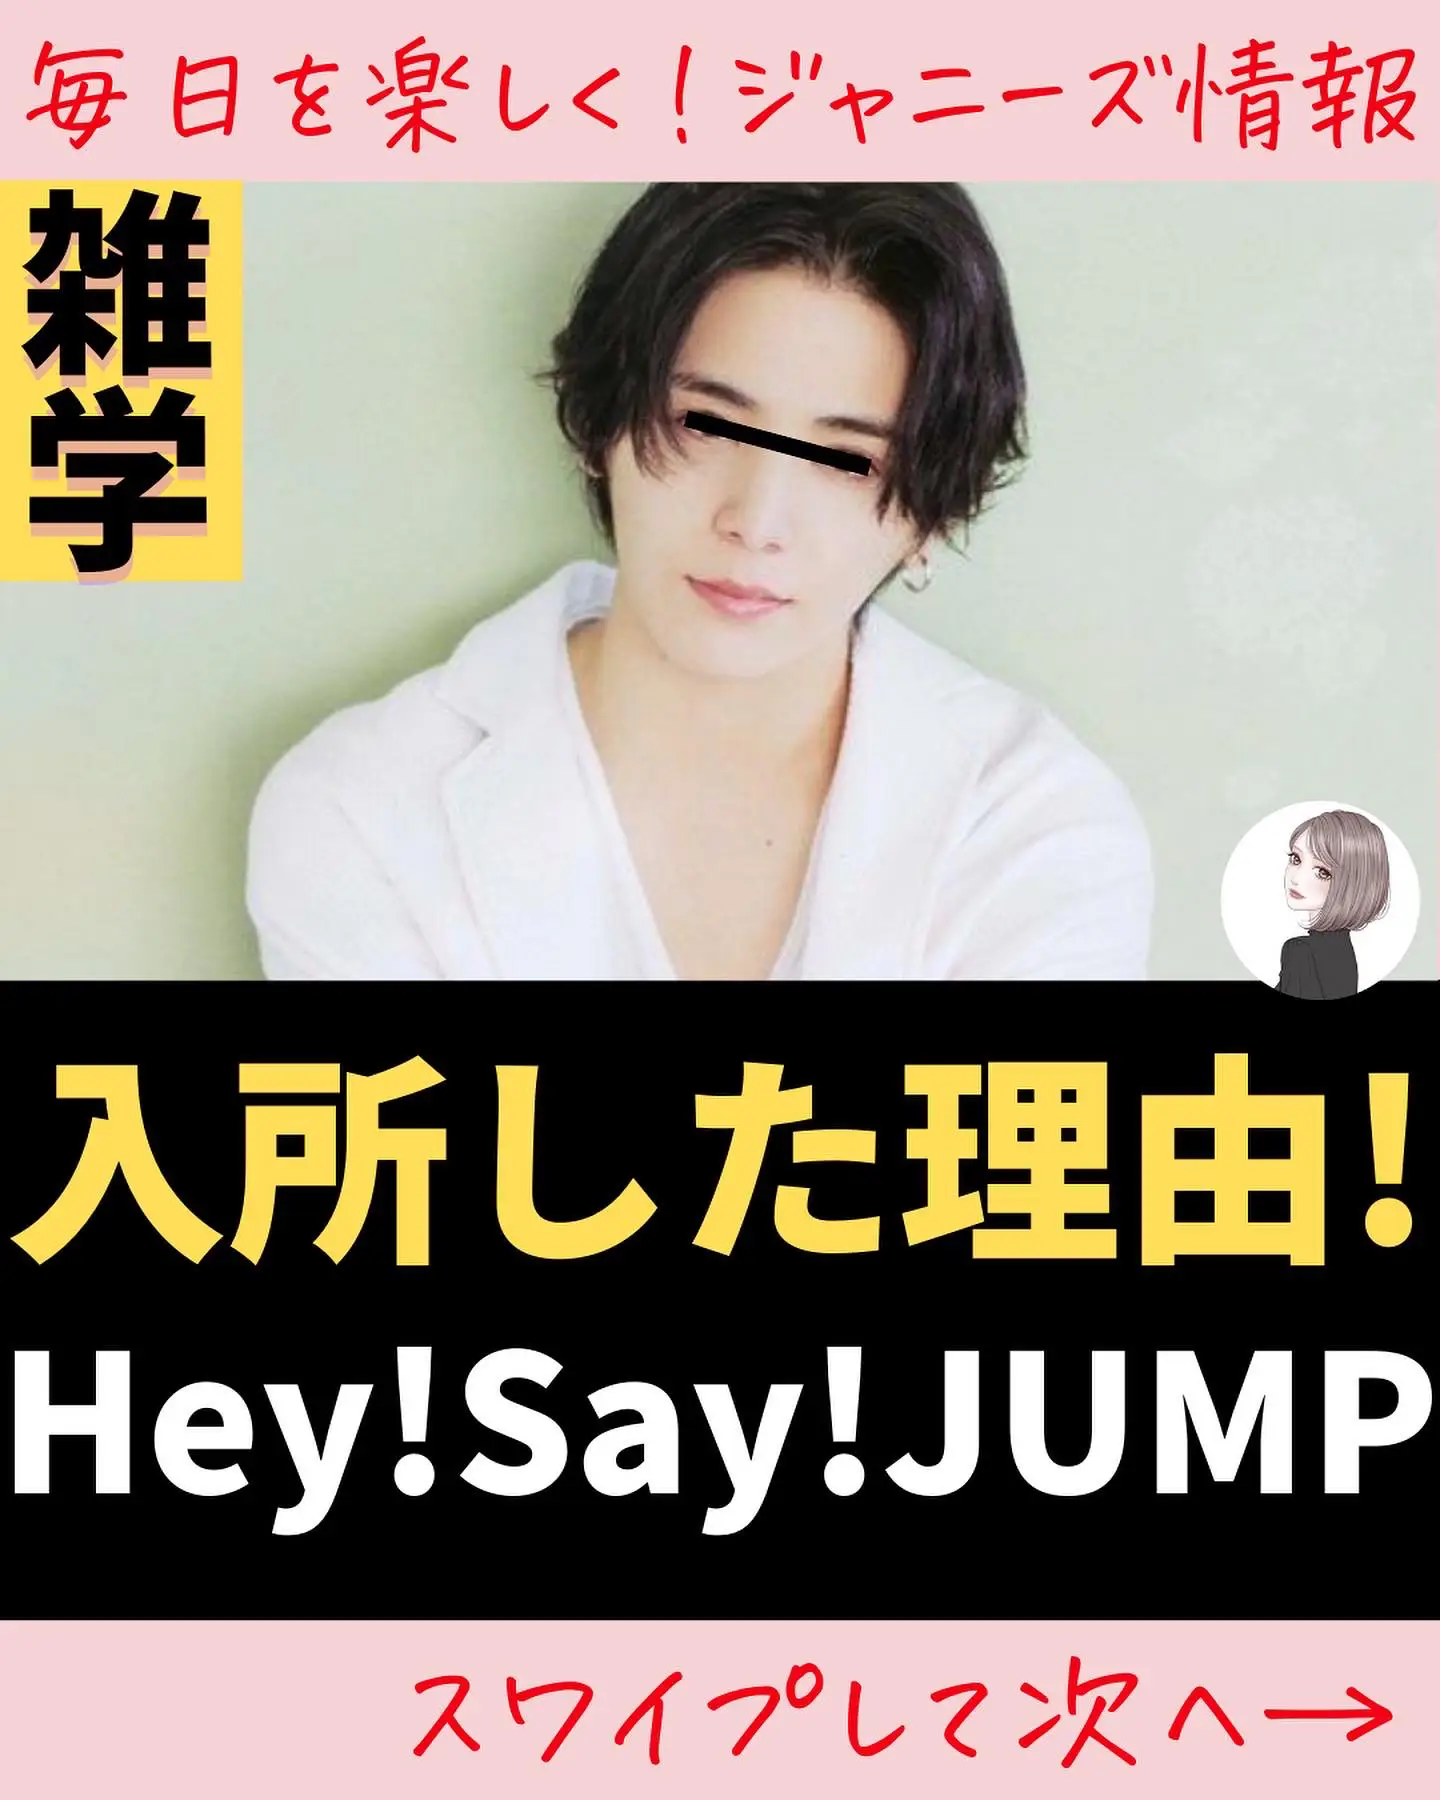 Hey Say Jump めんから - Lemon8検索